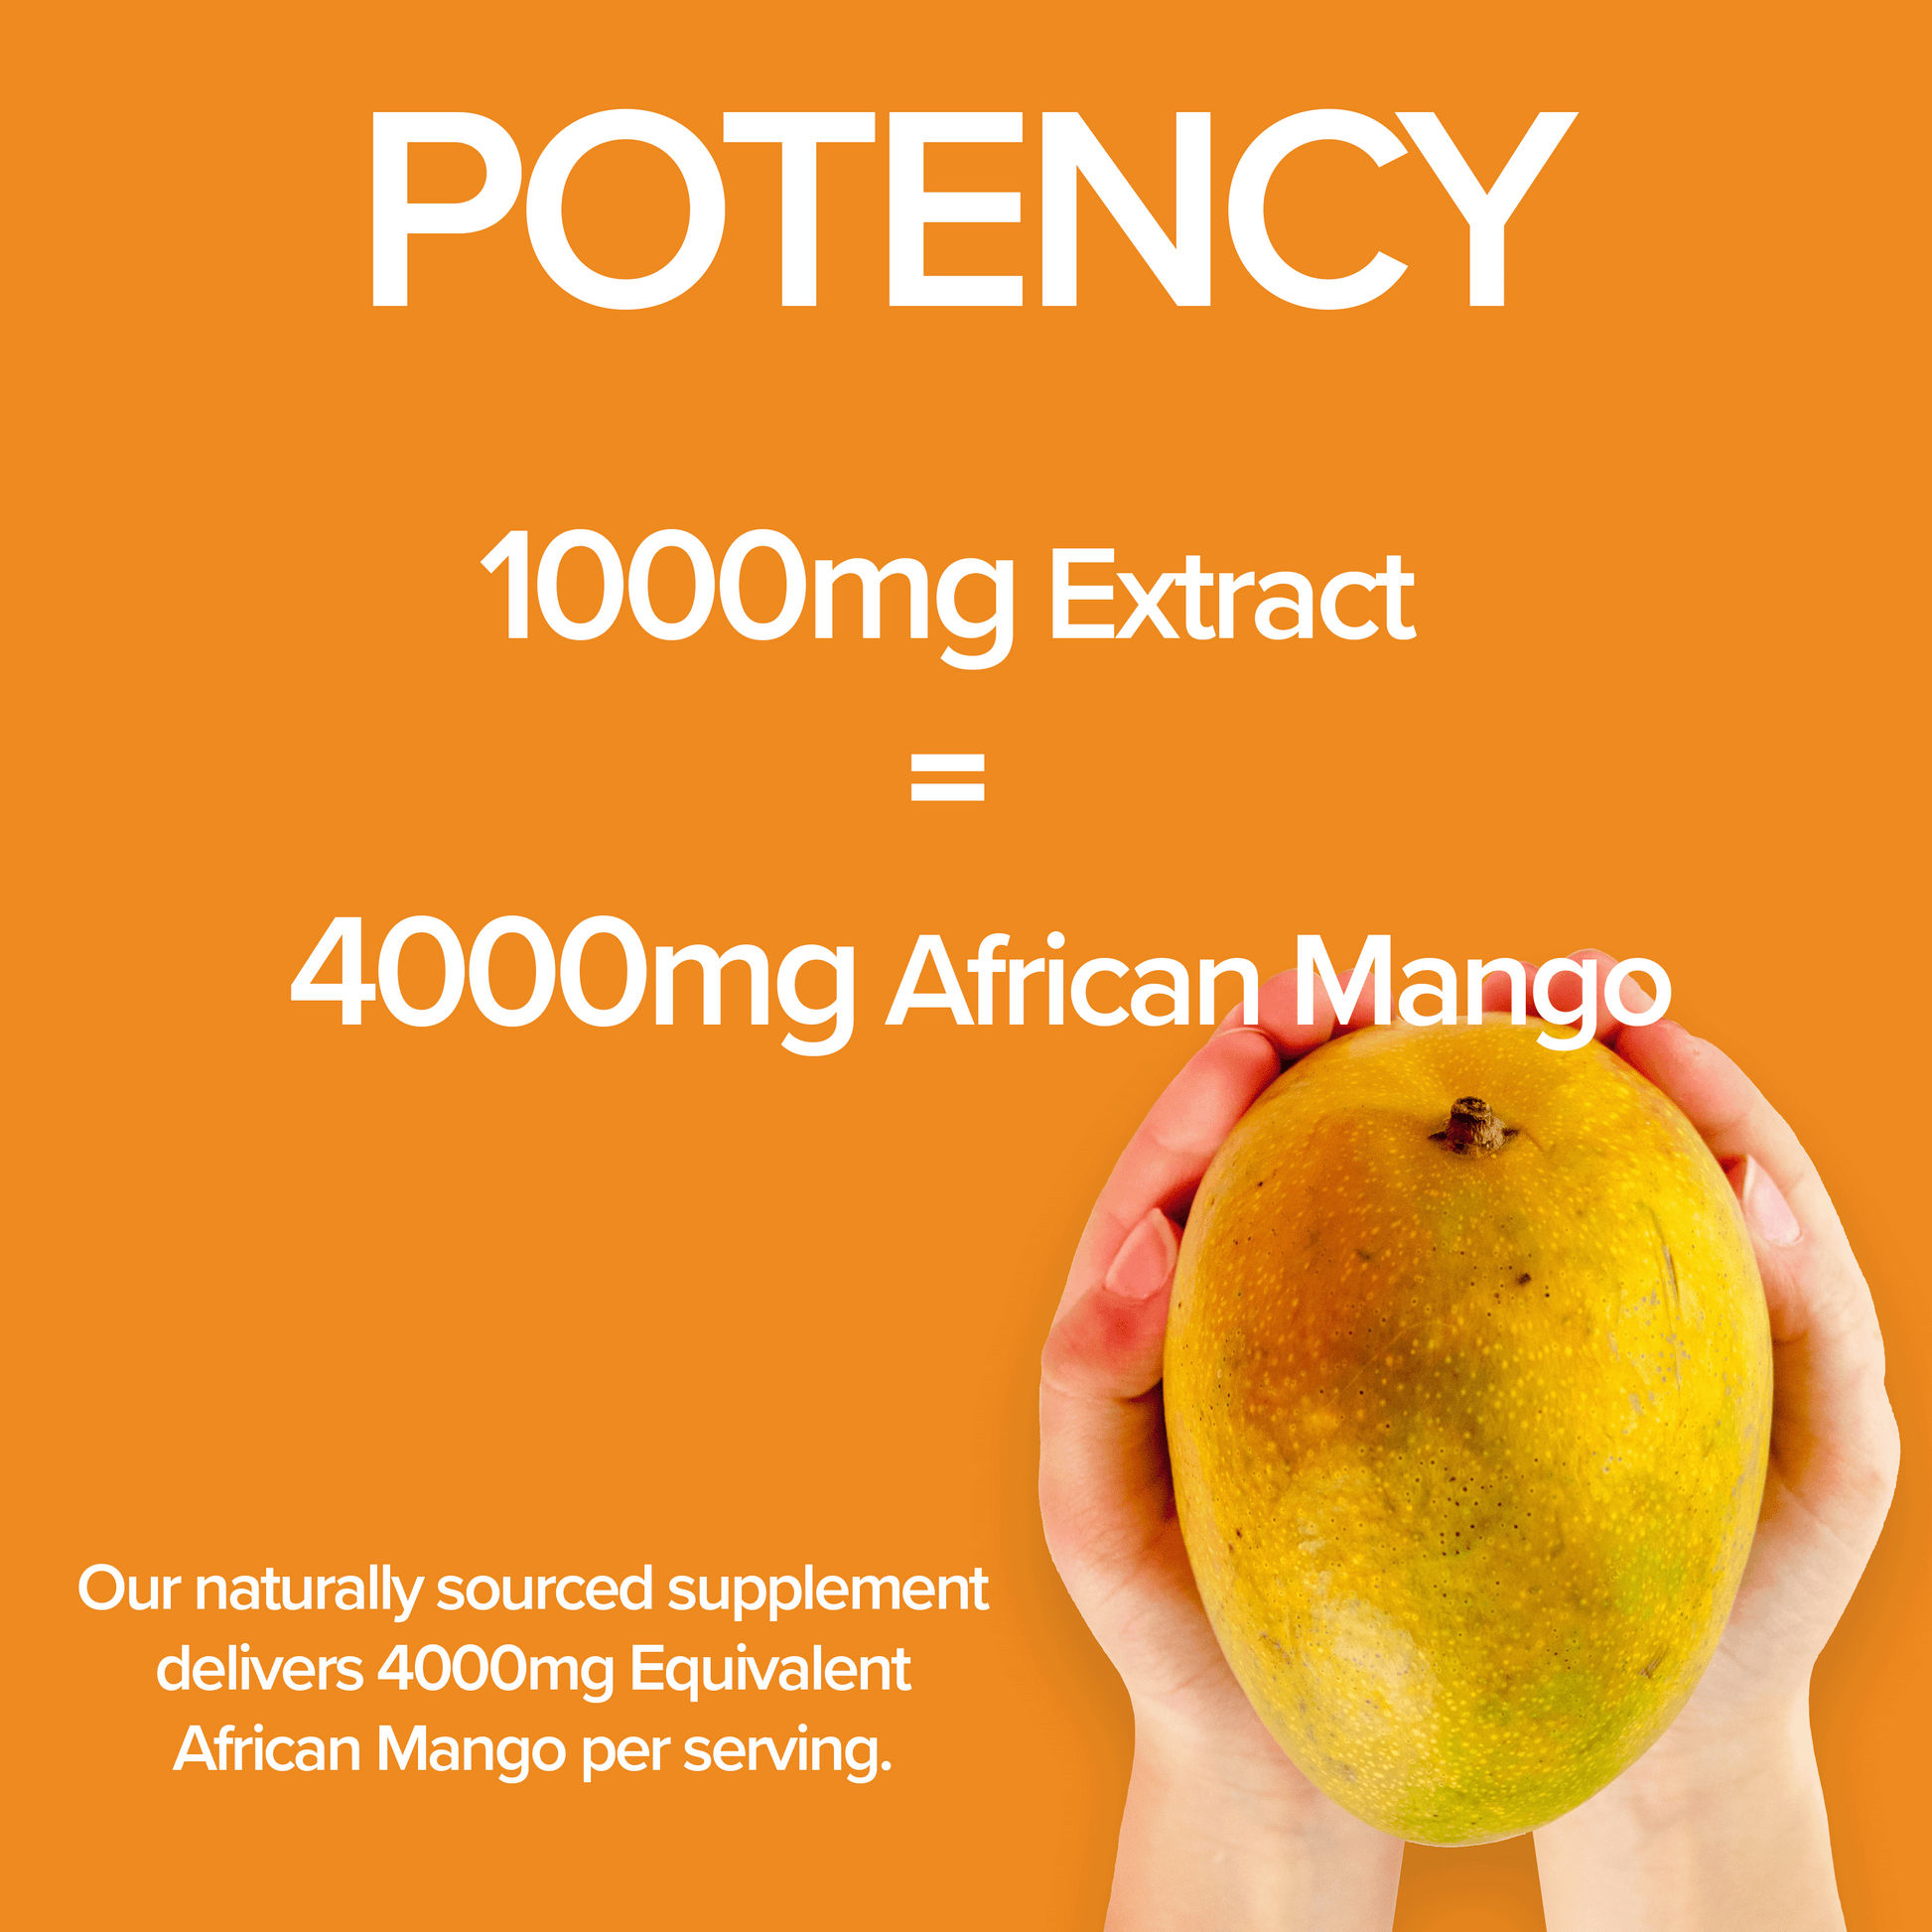 African Mango seed triglyceride levels